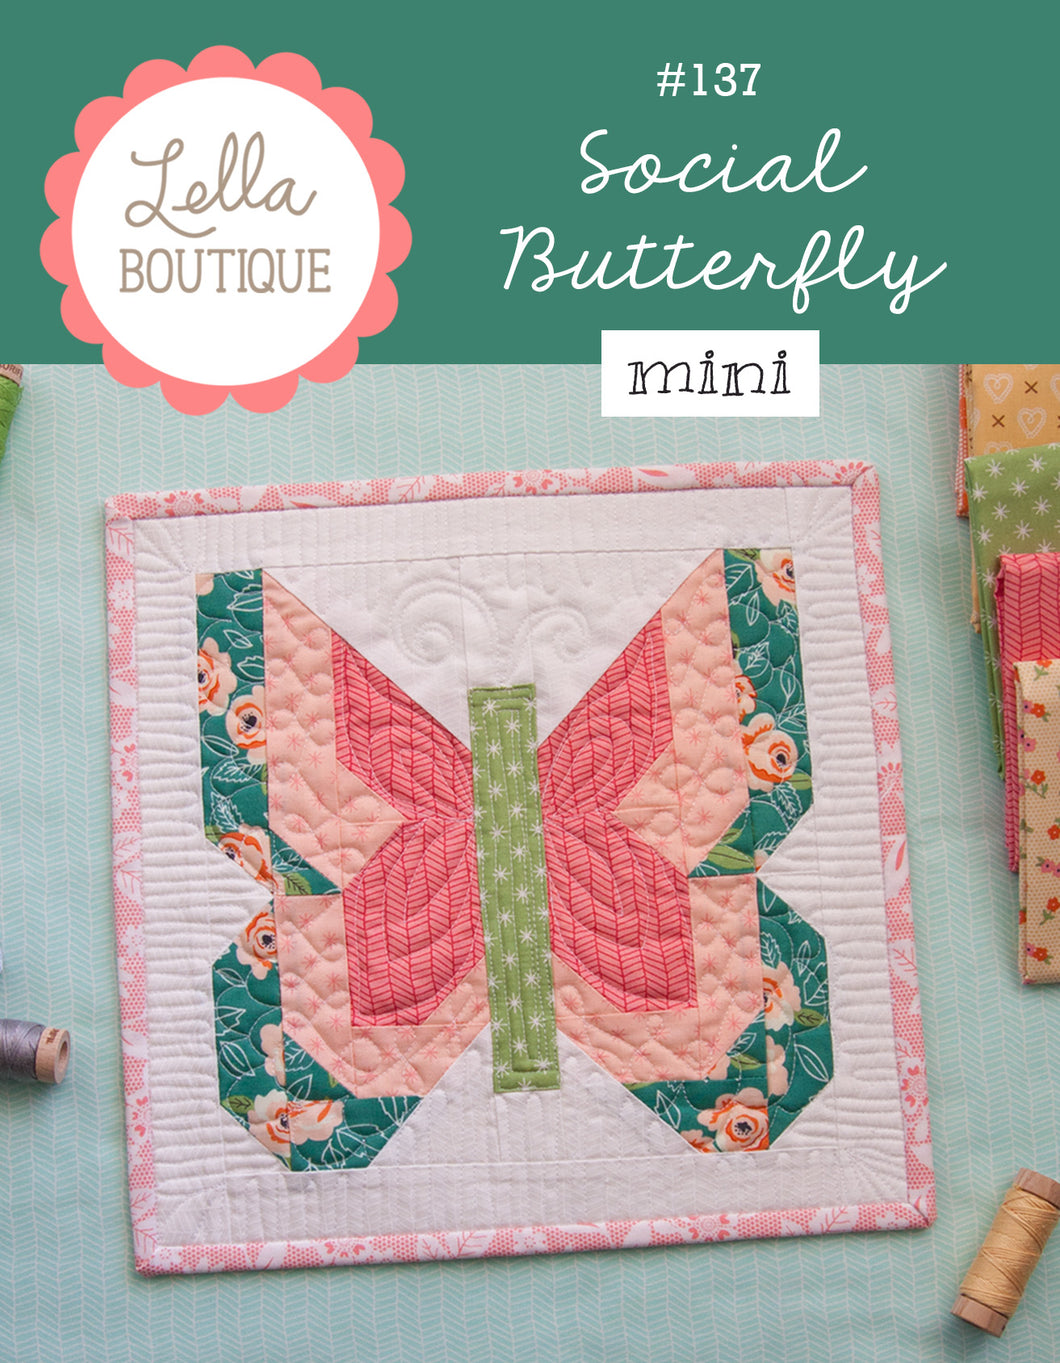 Social Butterfly mini quilt by Vanessa Goertzen of Lella Boutique. Fabric is Sugar Pie by Lella Boutique for Moda Fabrics.